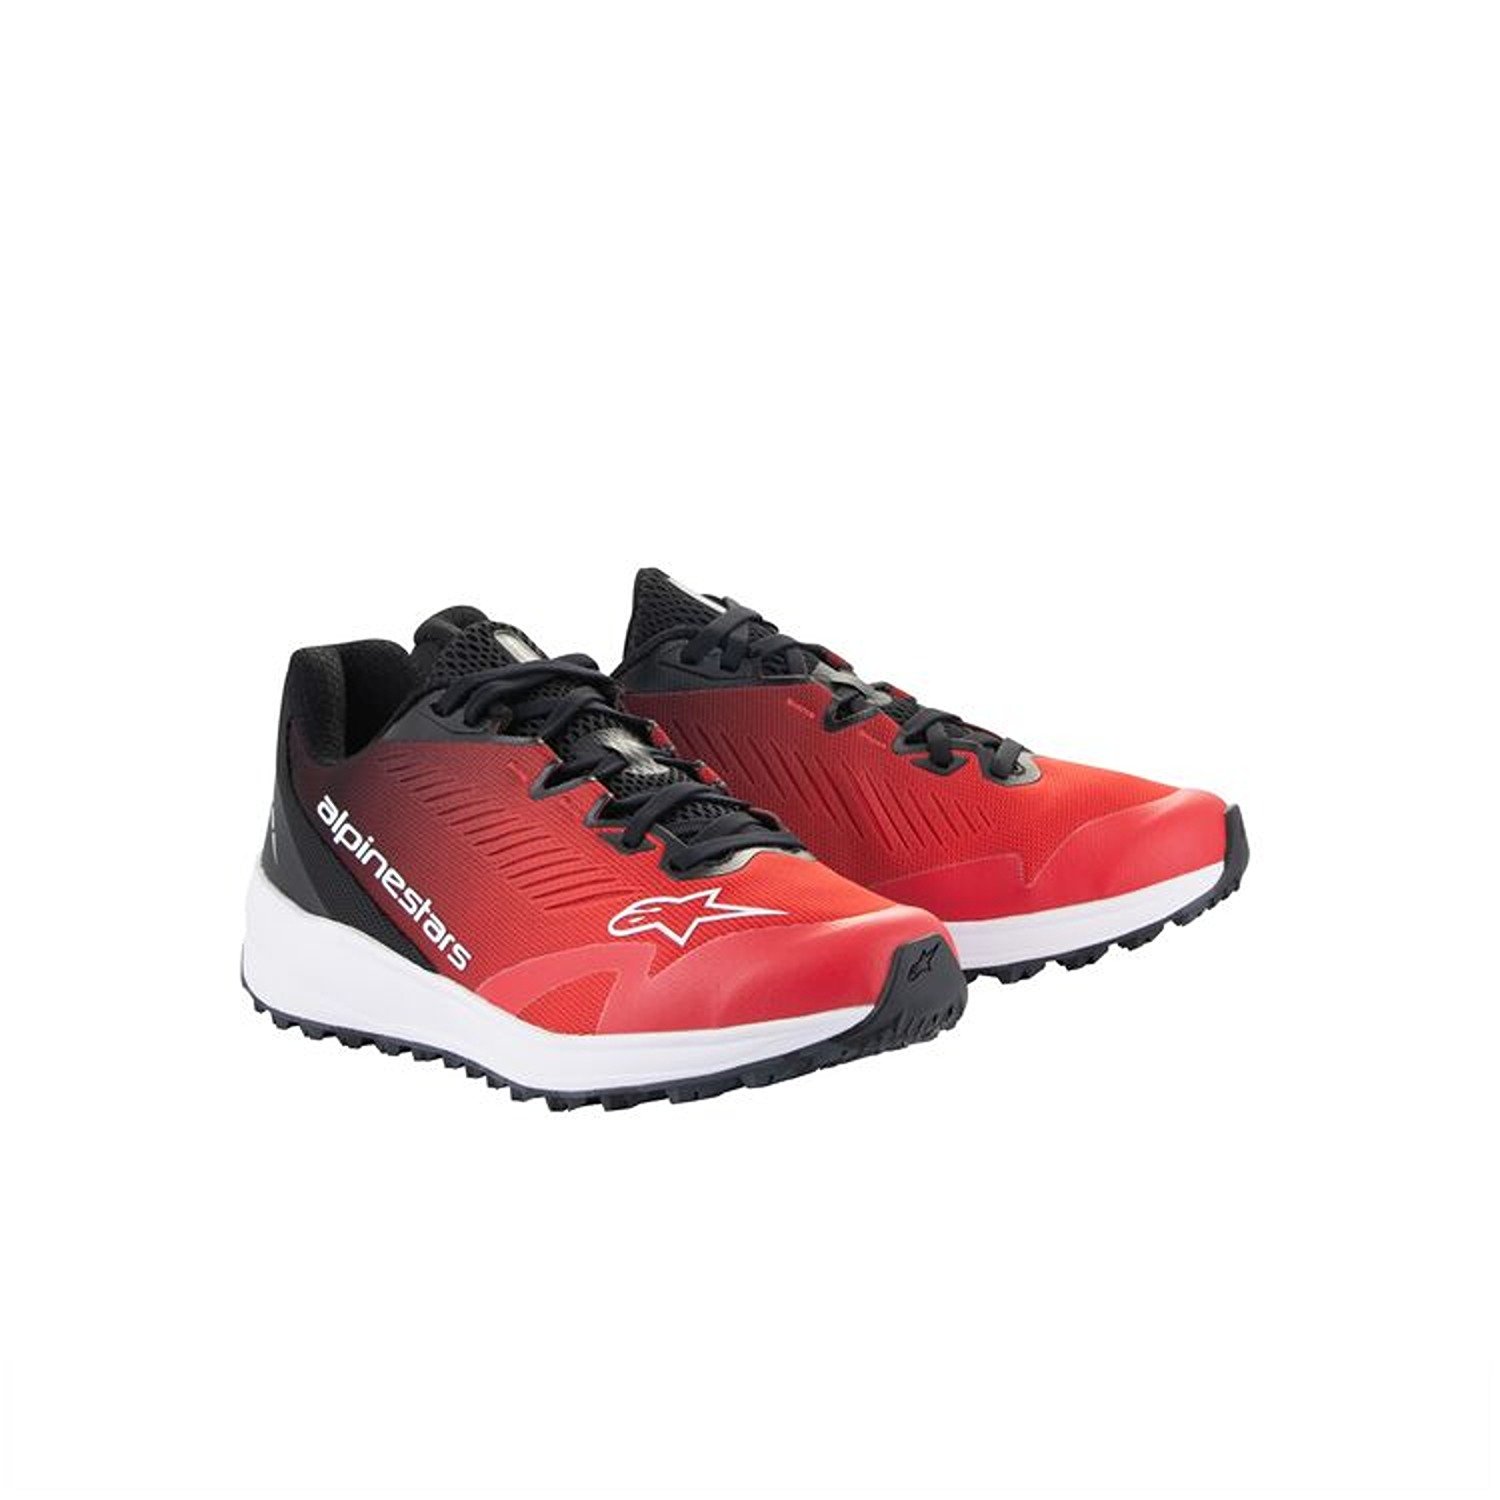 Image of Alpinestars Meta Road V2 Shoes Red Black White Size US 75 EN